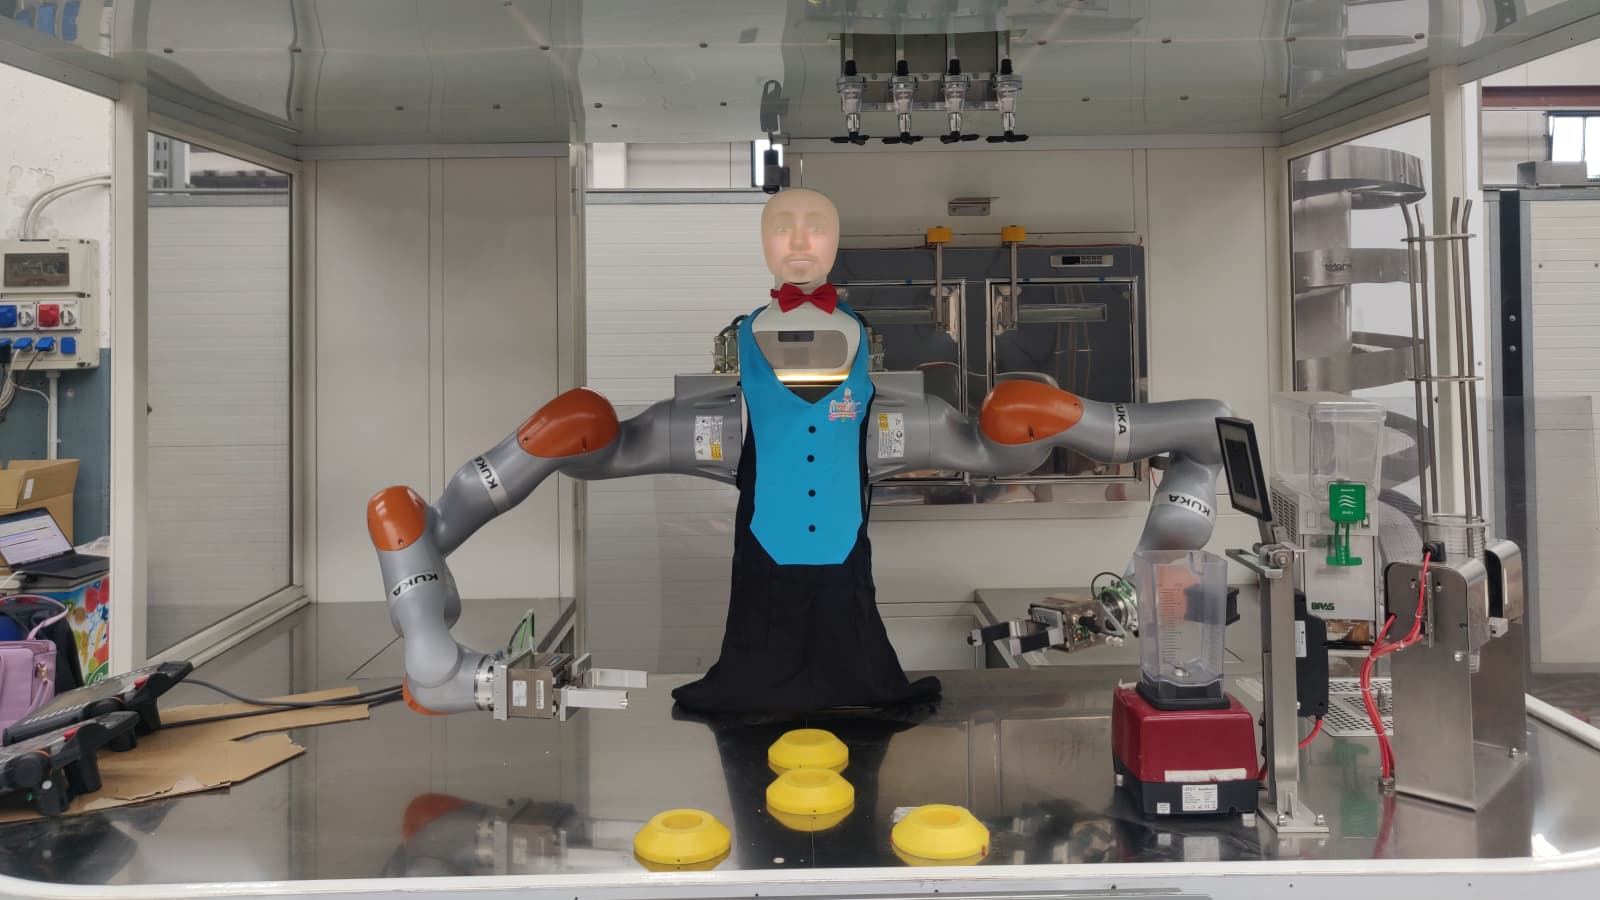 Meet BRILLO, the bartending robot that can make small talk